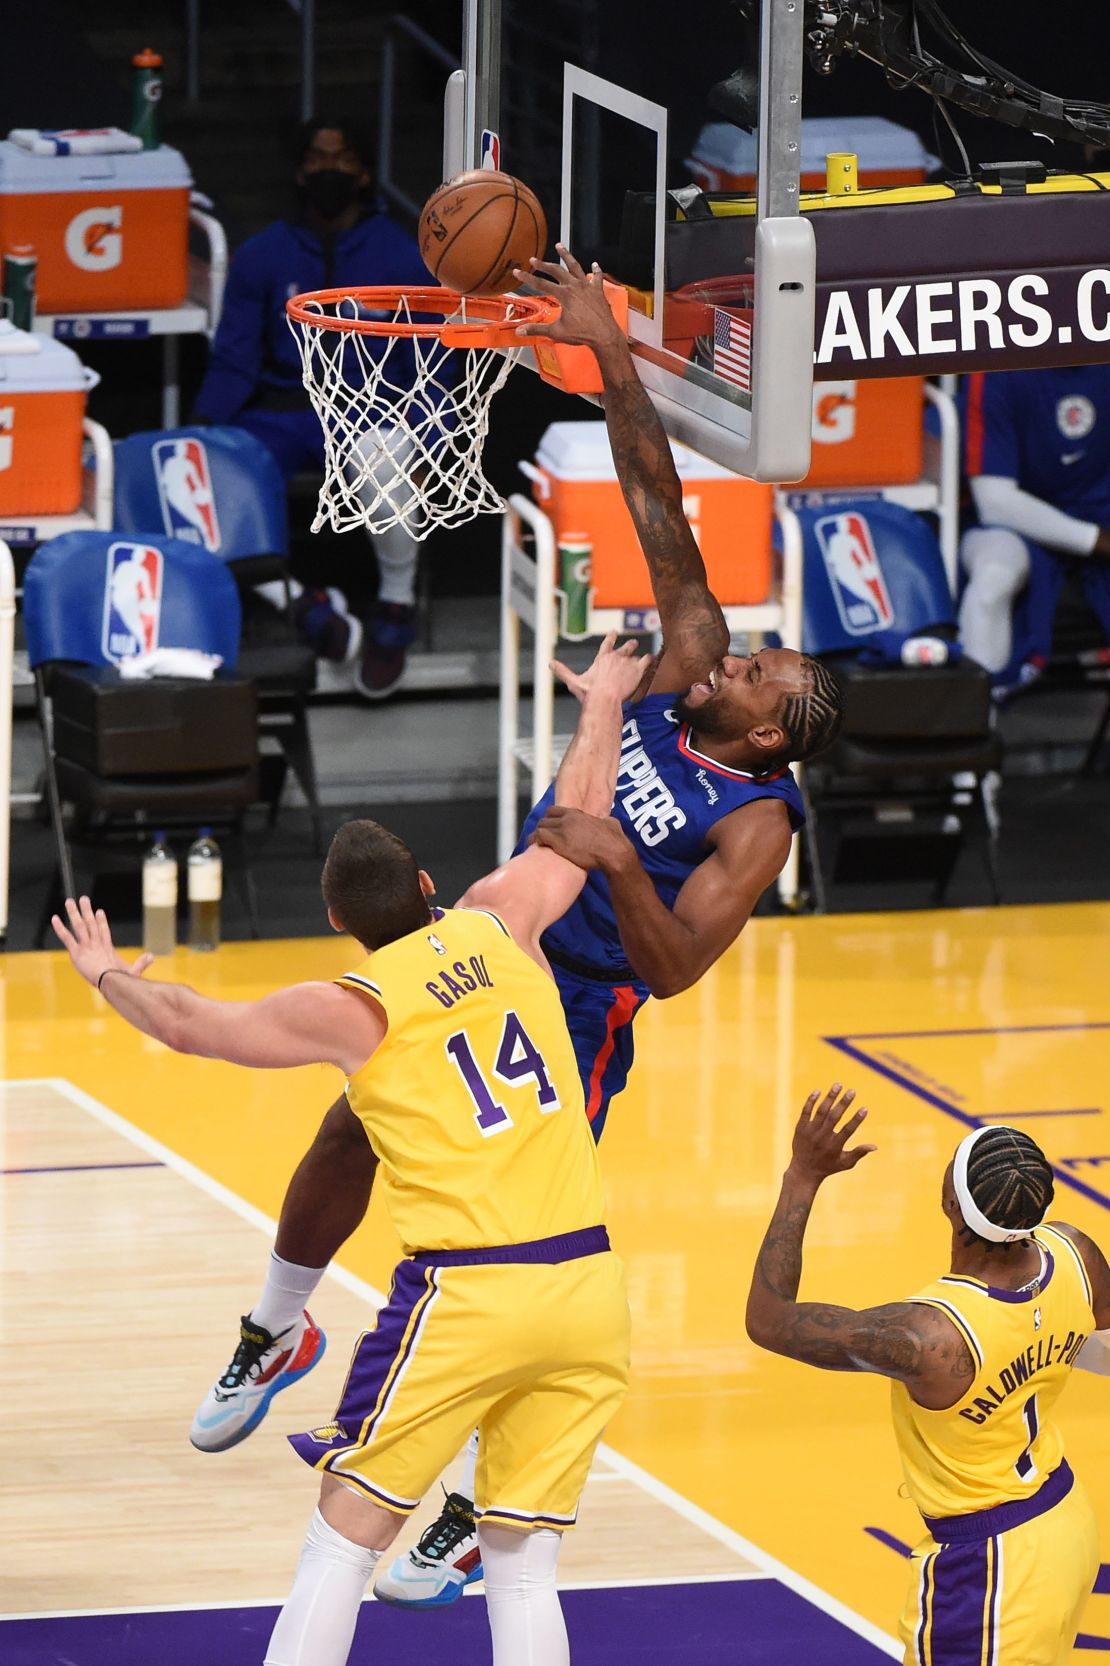 Kawhi Leonard dunks the ball against the Lakers.